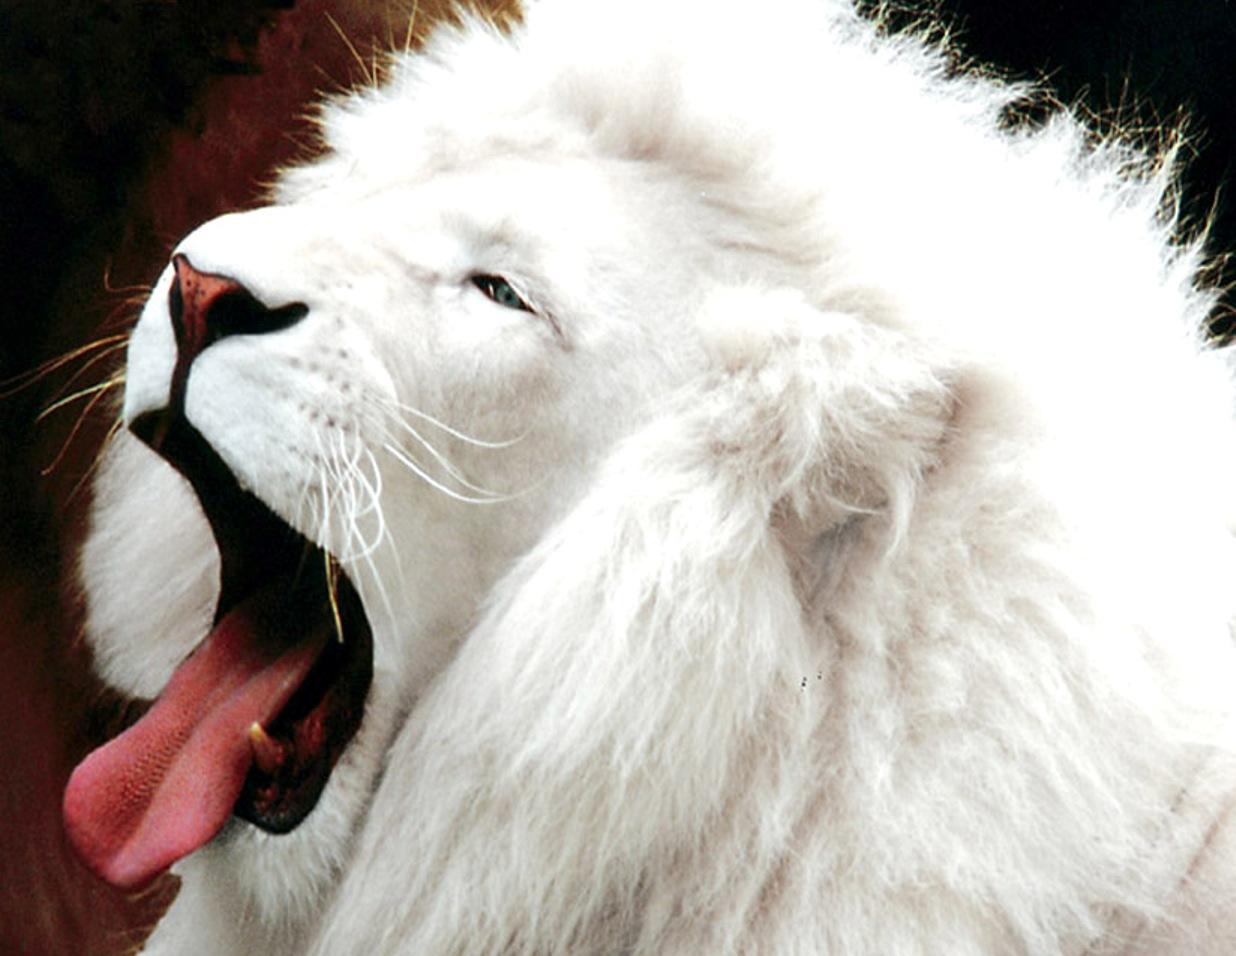 White Lion Wallpaper Desktop HD In Animals Imageci